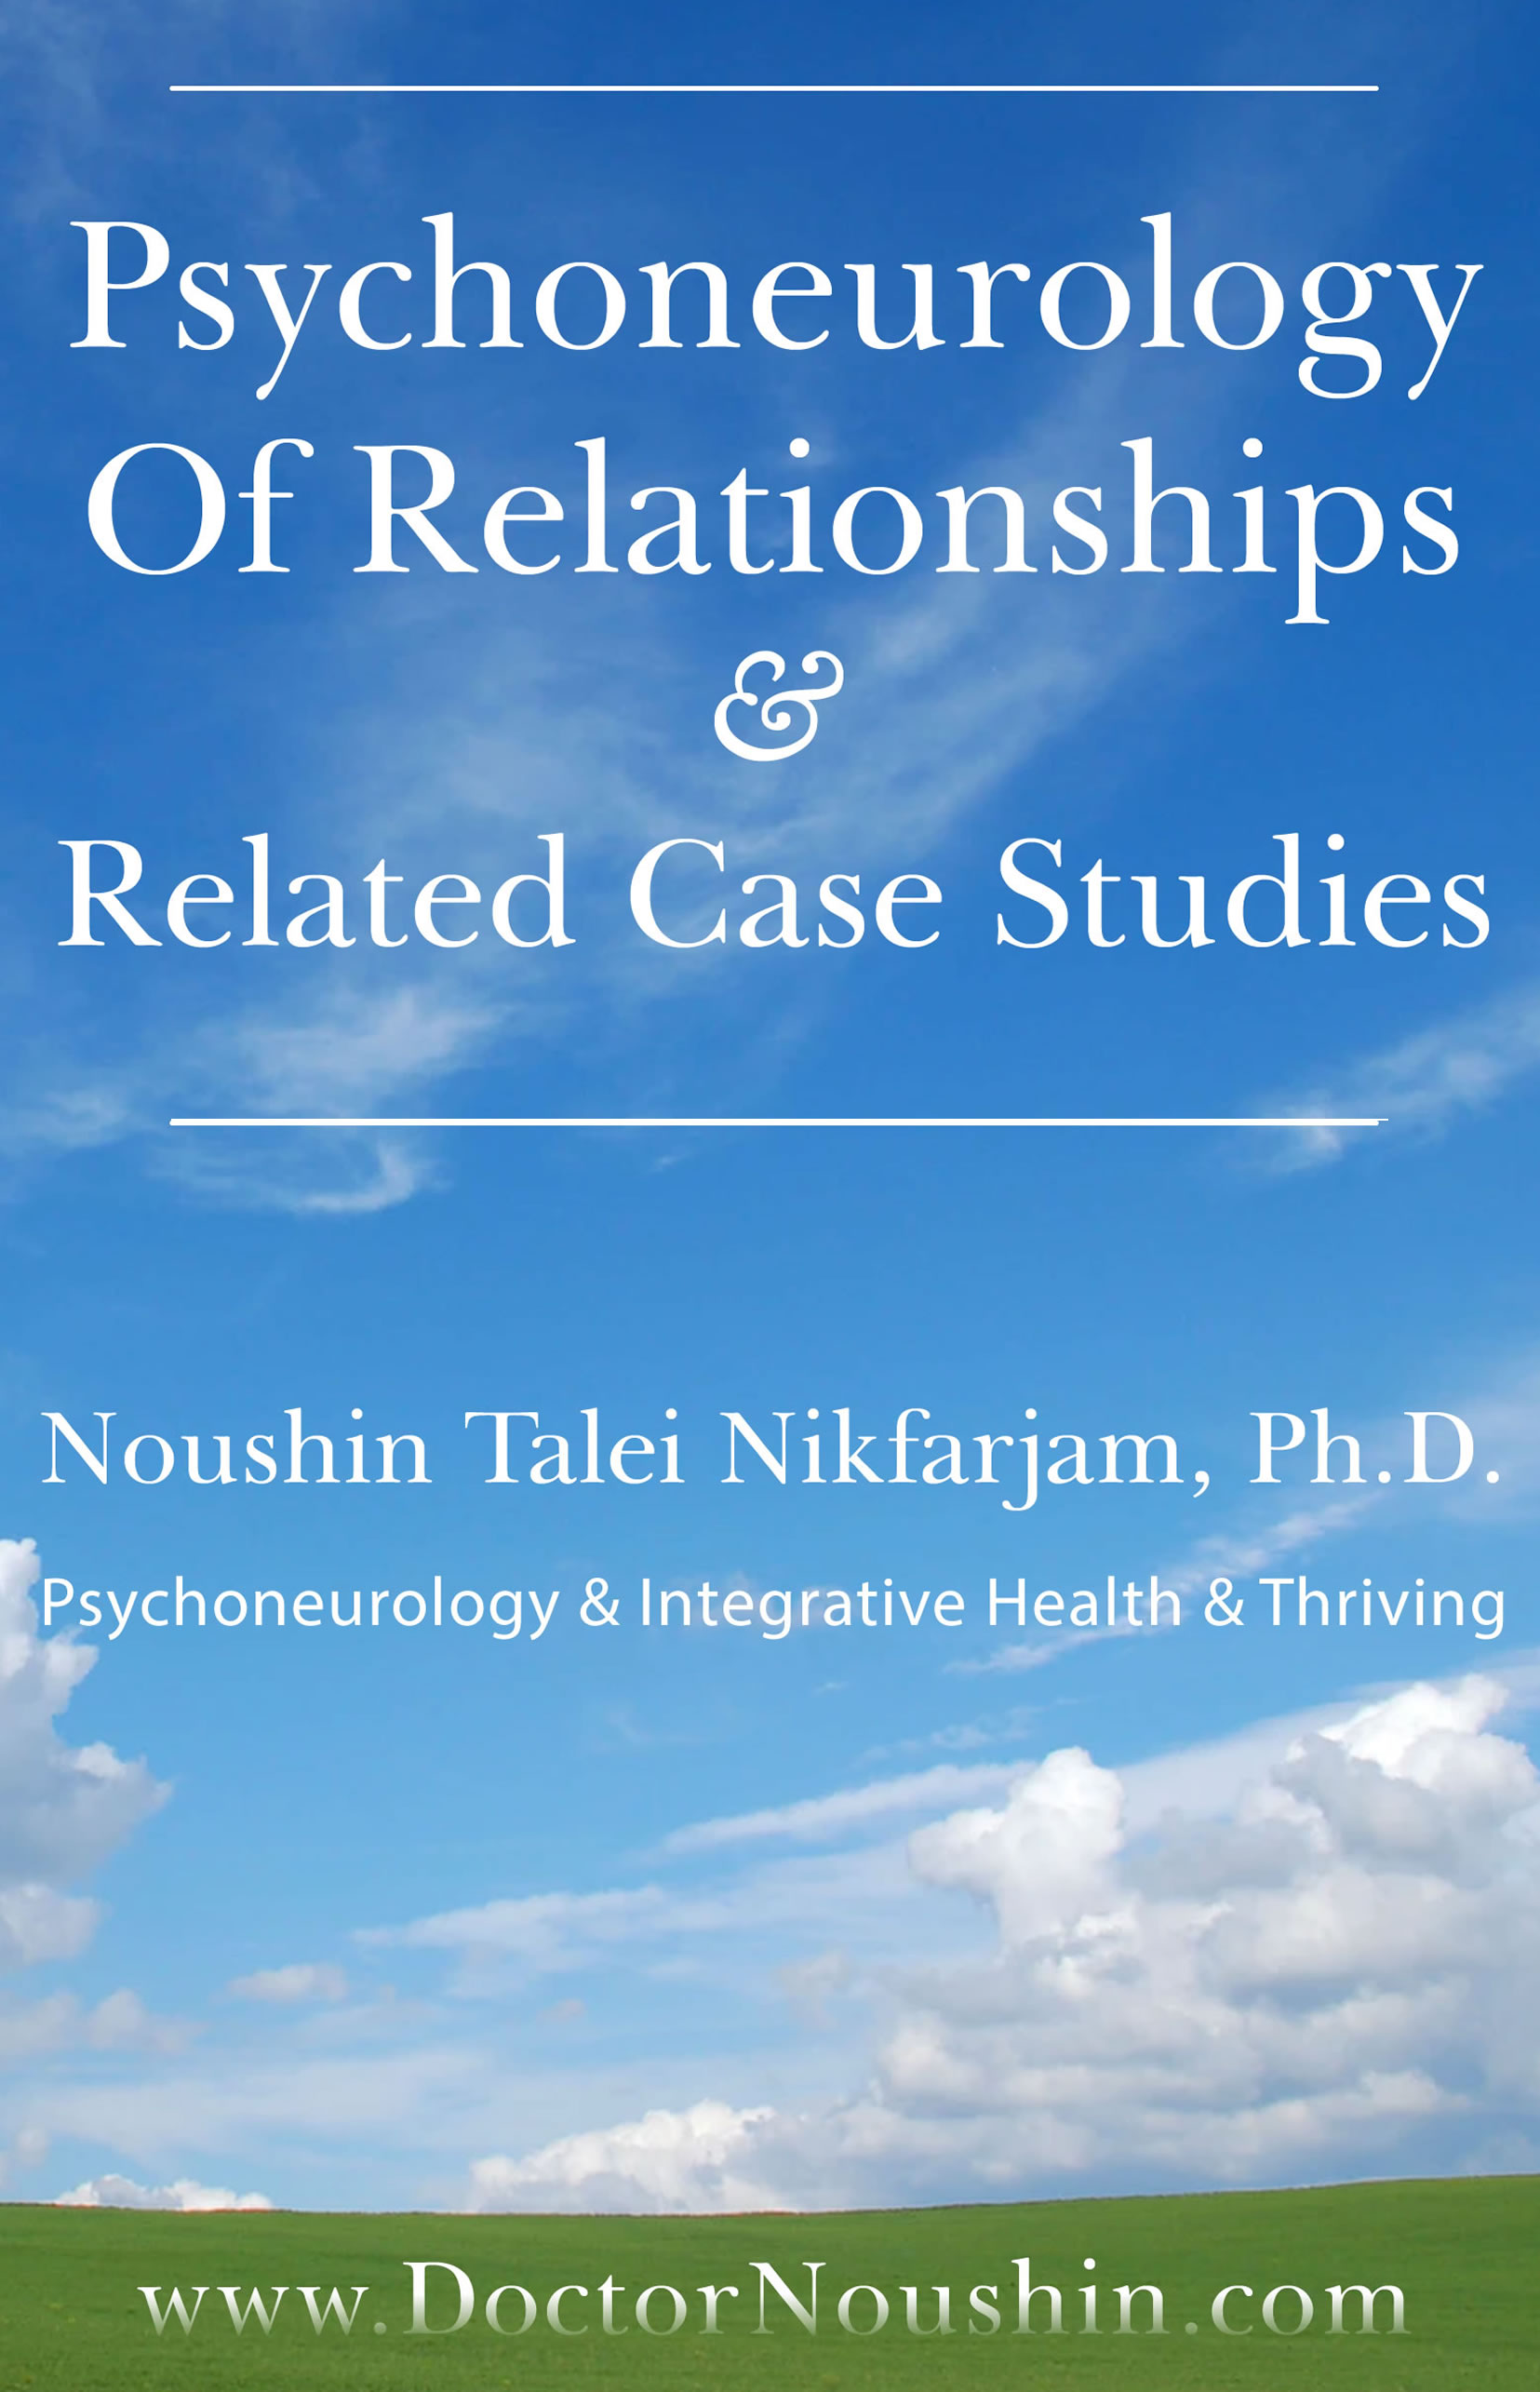 Psychoneurology Of Relationships & Related Case Studies: Psychoneurology & Integrative Health & Thriving